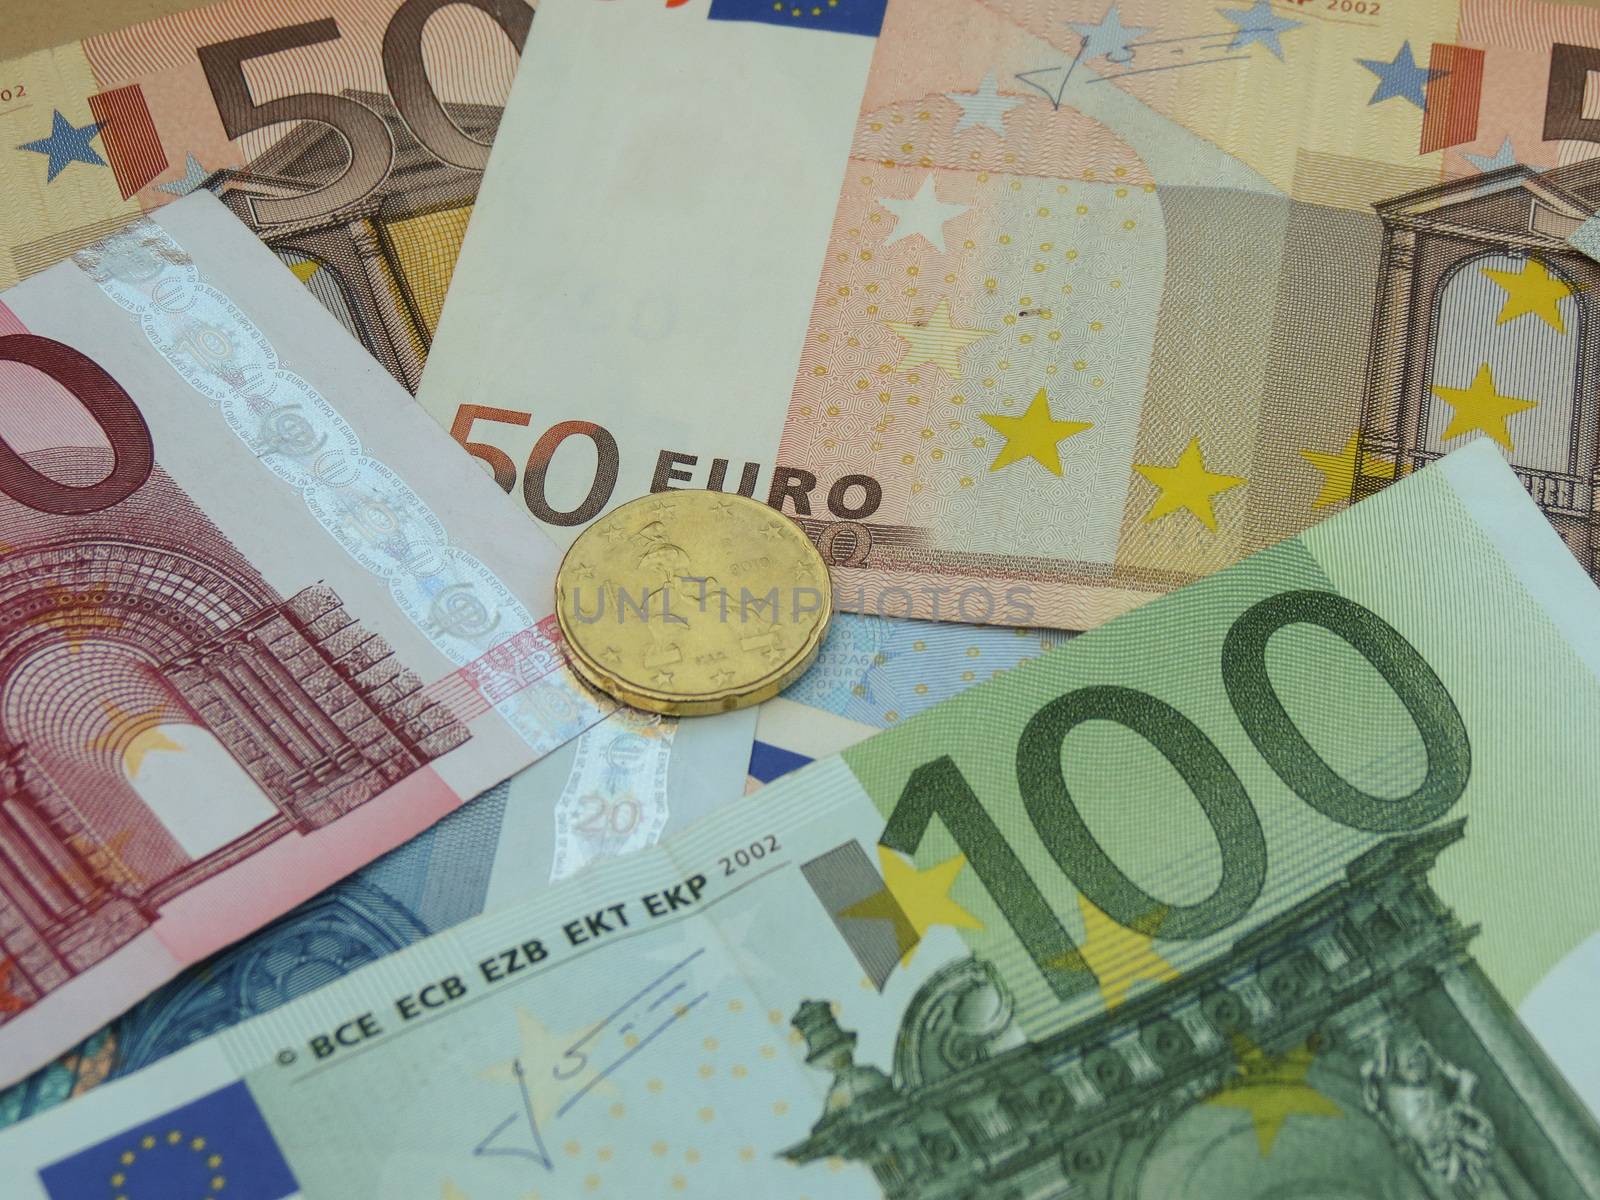 Euro (EUR) banknotes - legal tender of the European Union